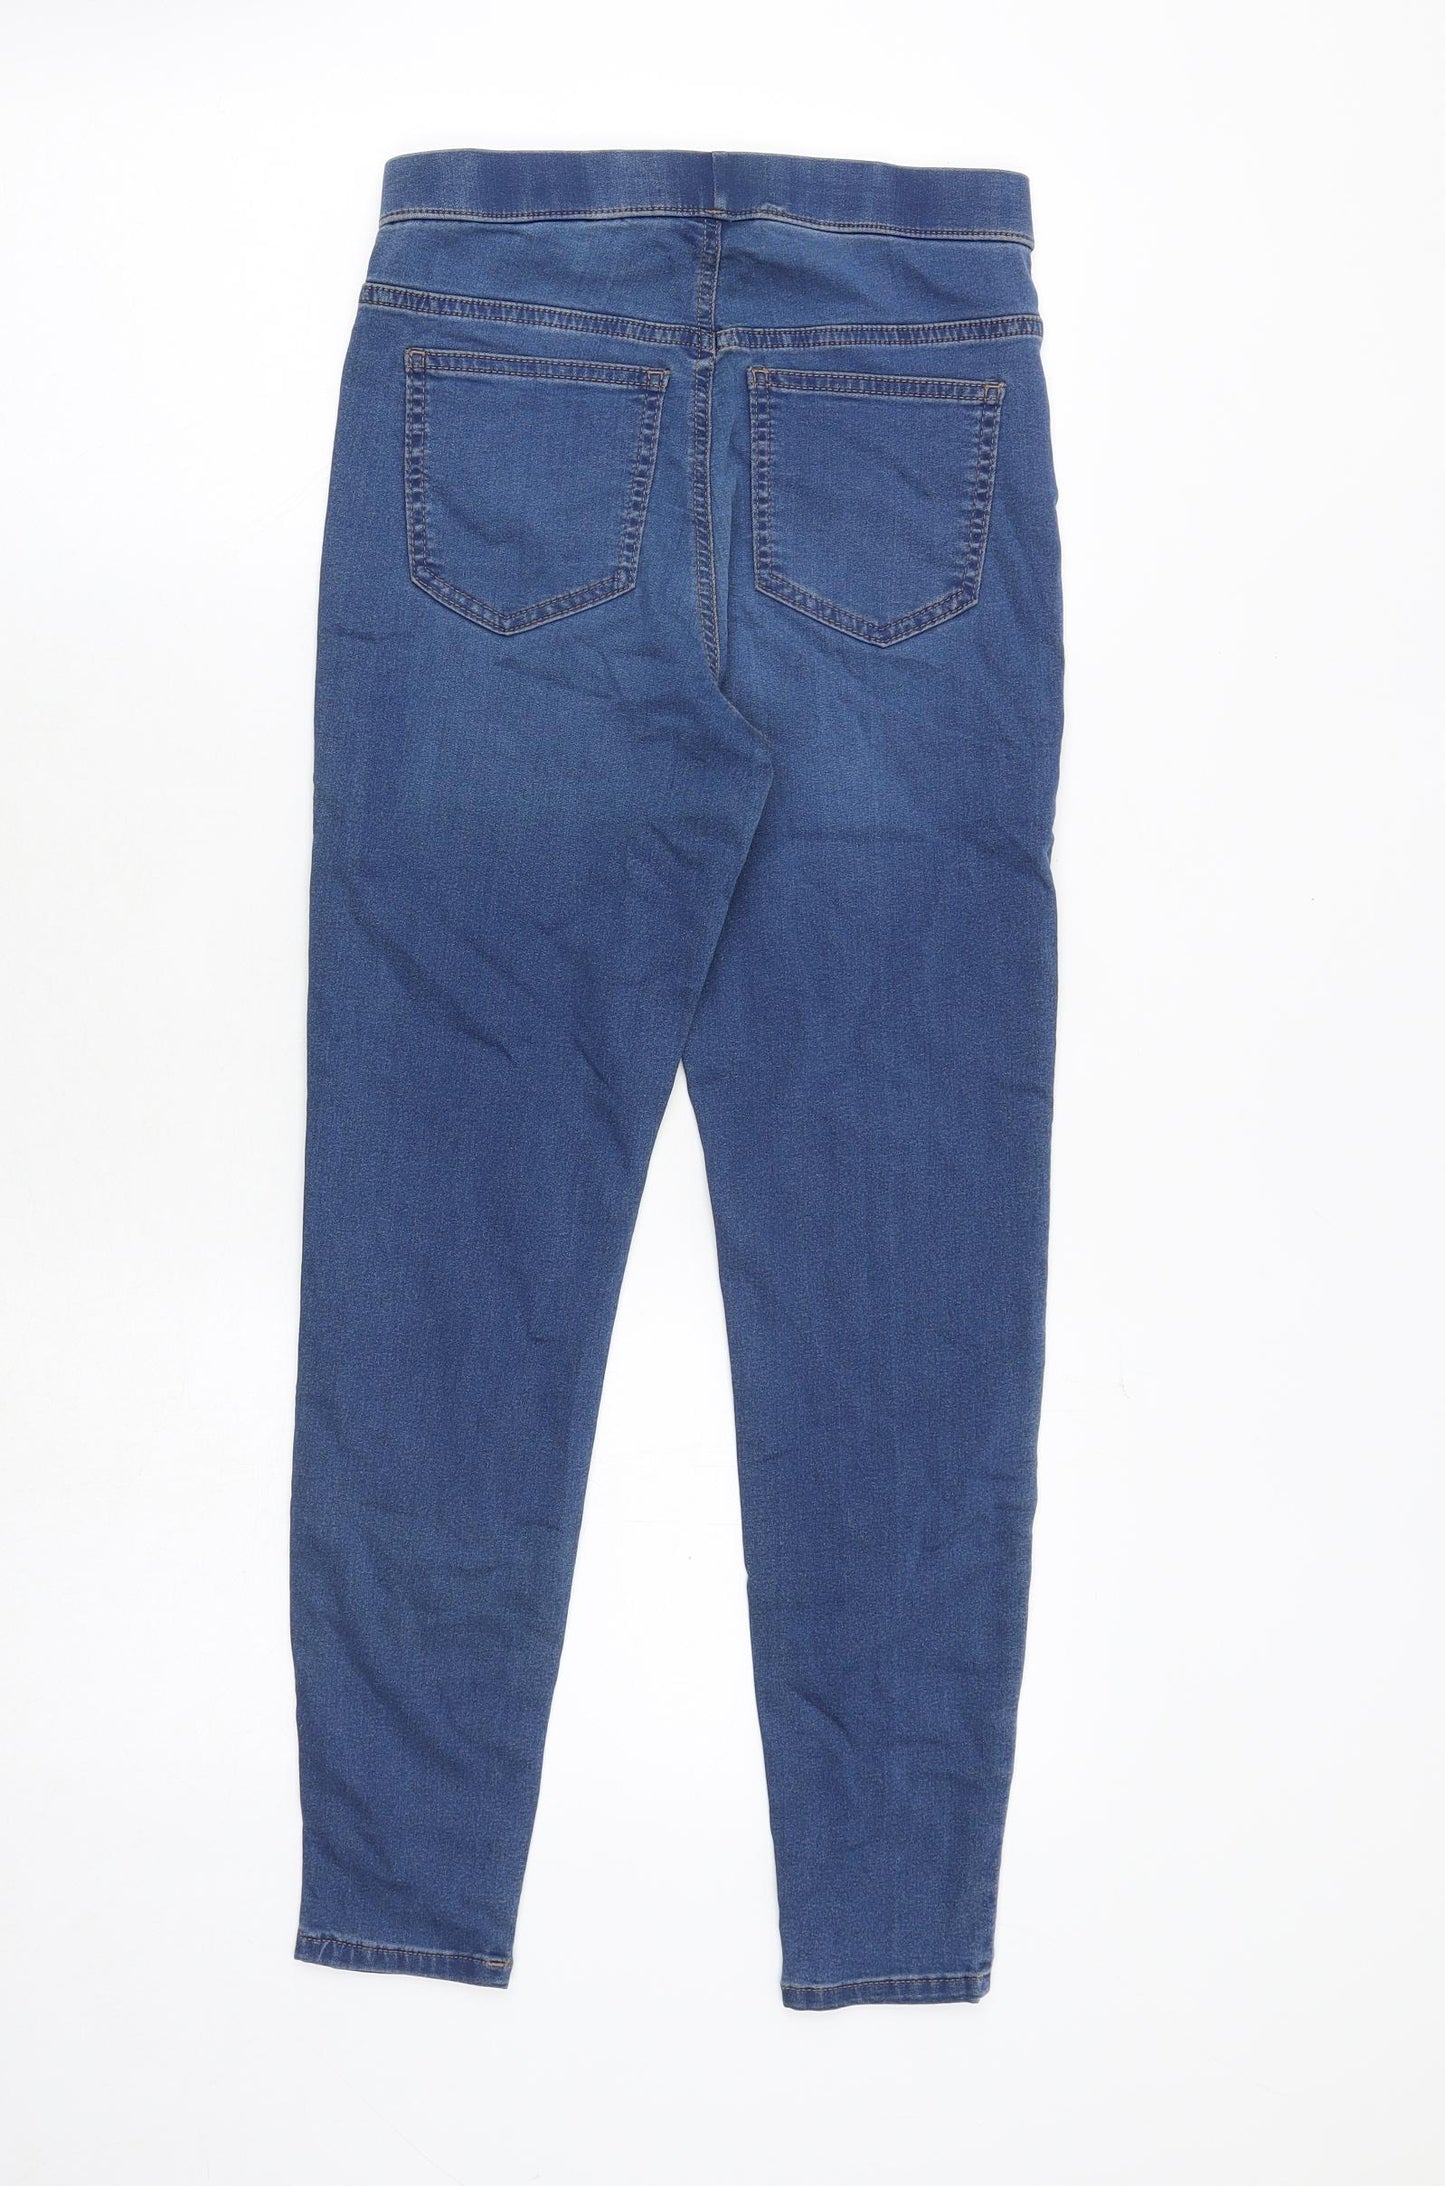 Marks and Spencer Womens Blue Cotton Jegging Jeans Size 8 Regular